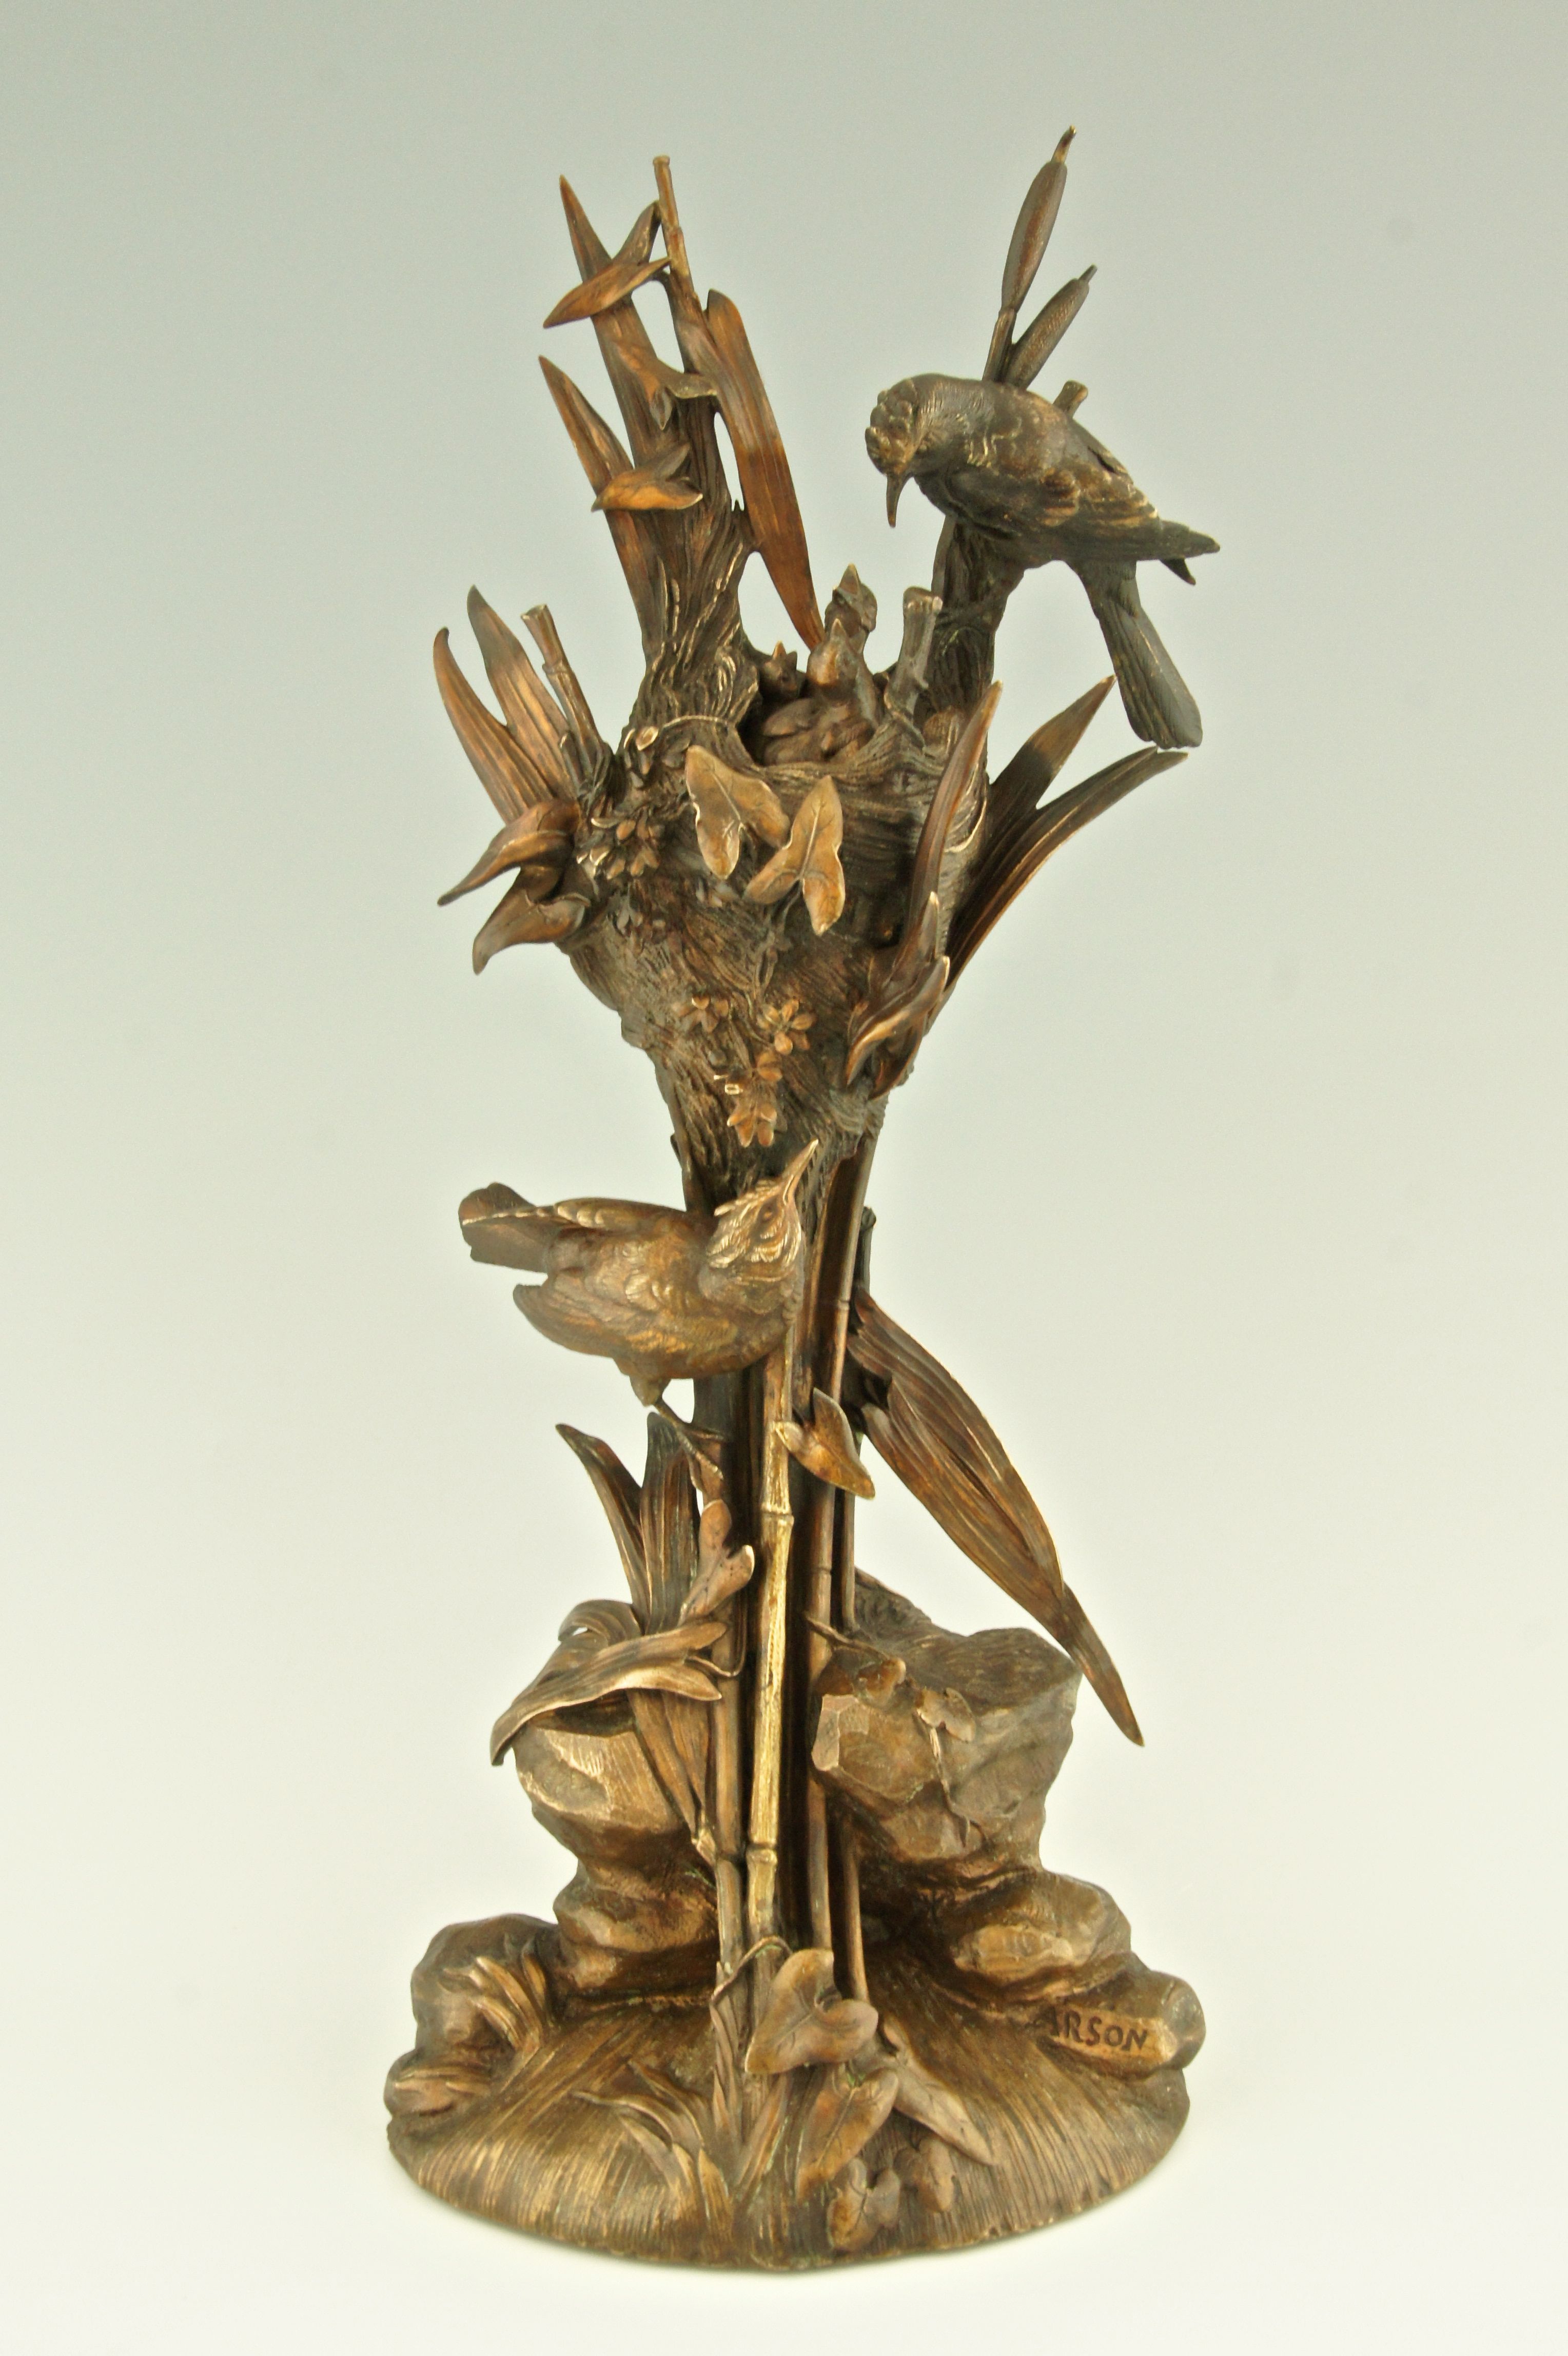 Antique Bronze Sculpture of Birds at a Nest by A. Arson